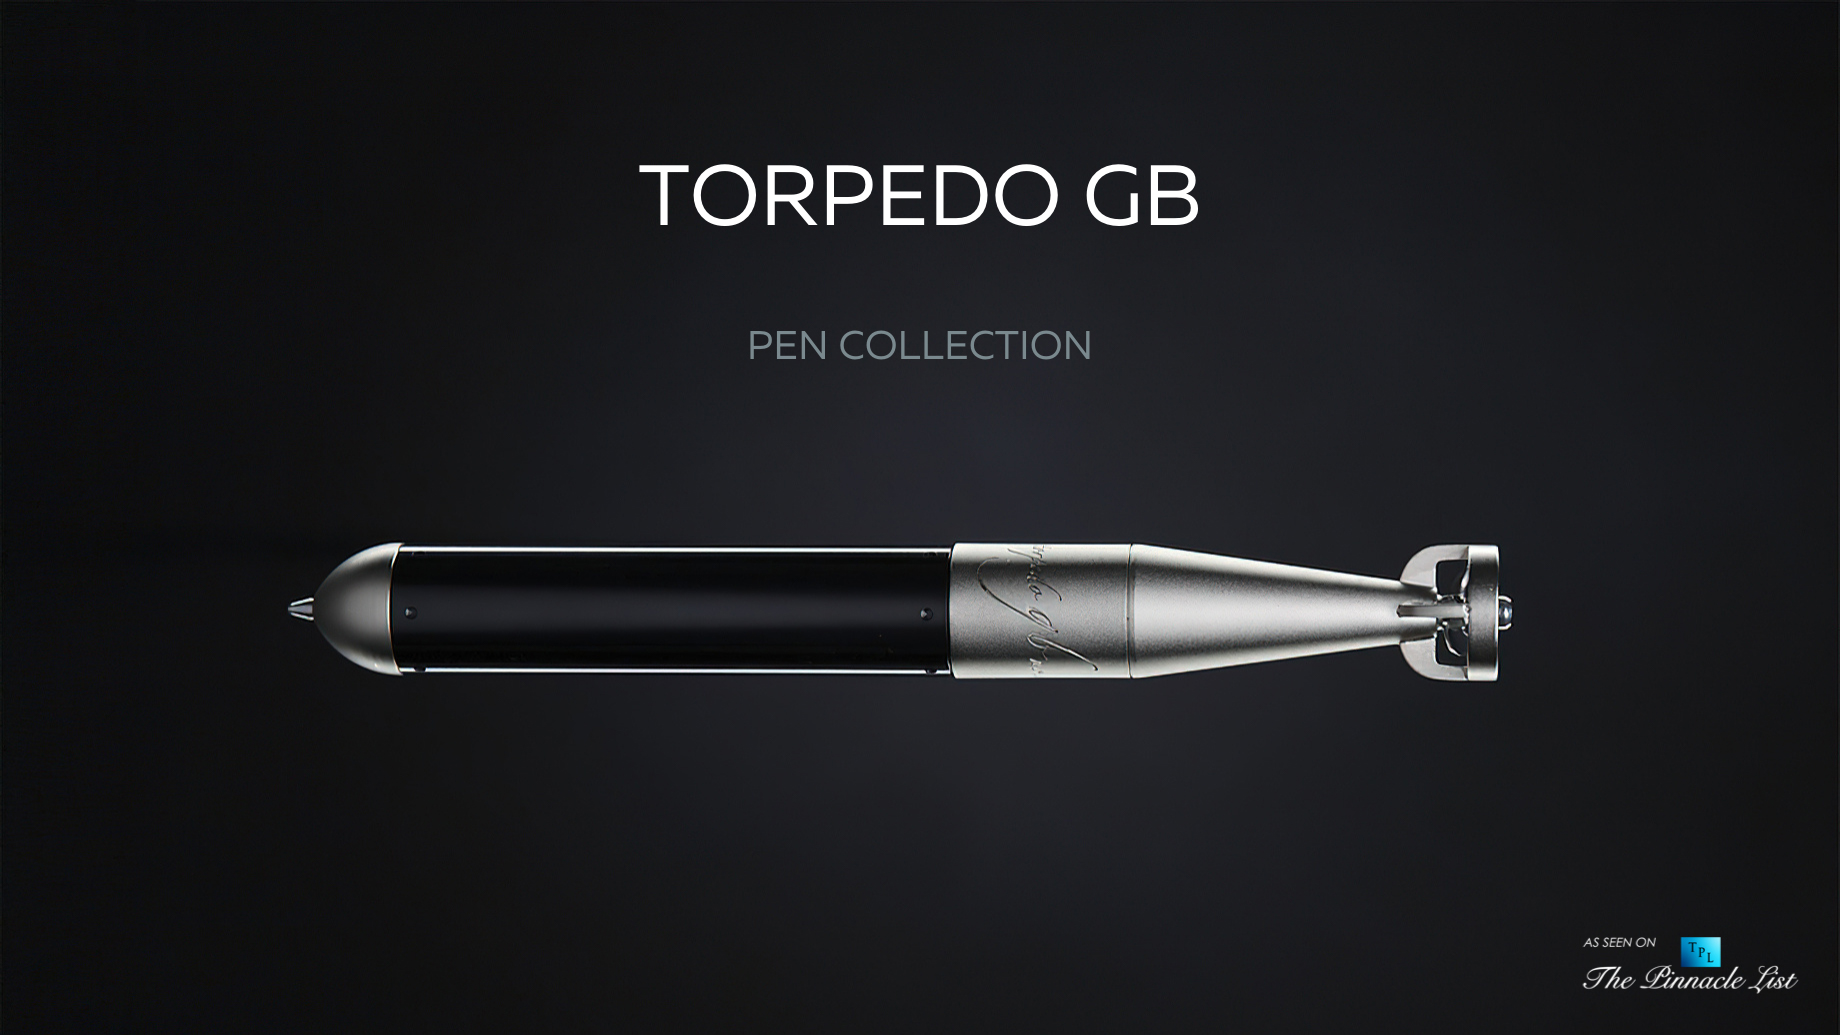 Torpedo GB Luxury Pen Collection Inspired by Original 1860 Rijeka Invention